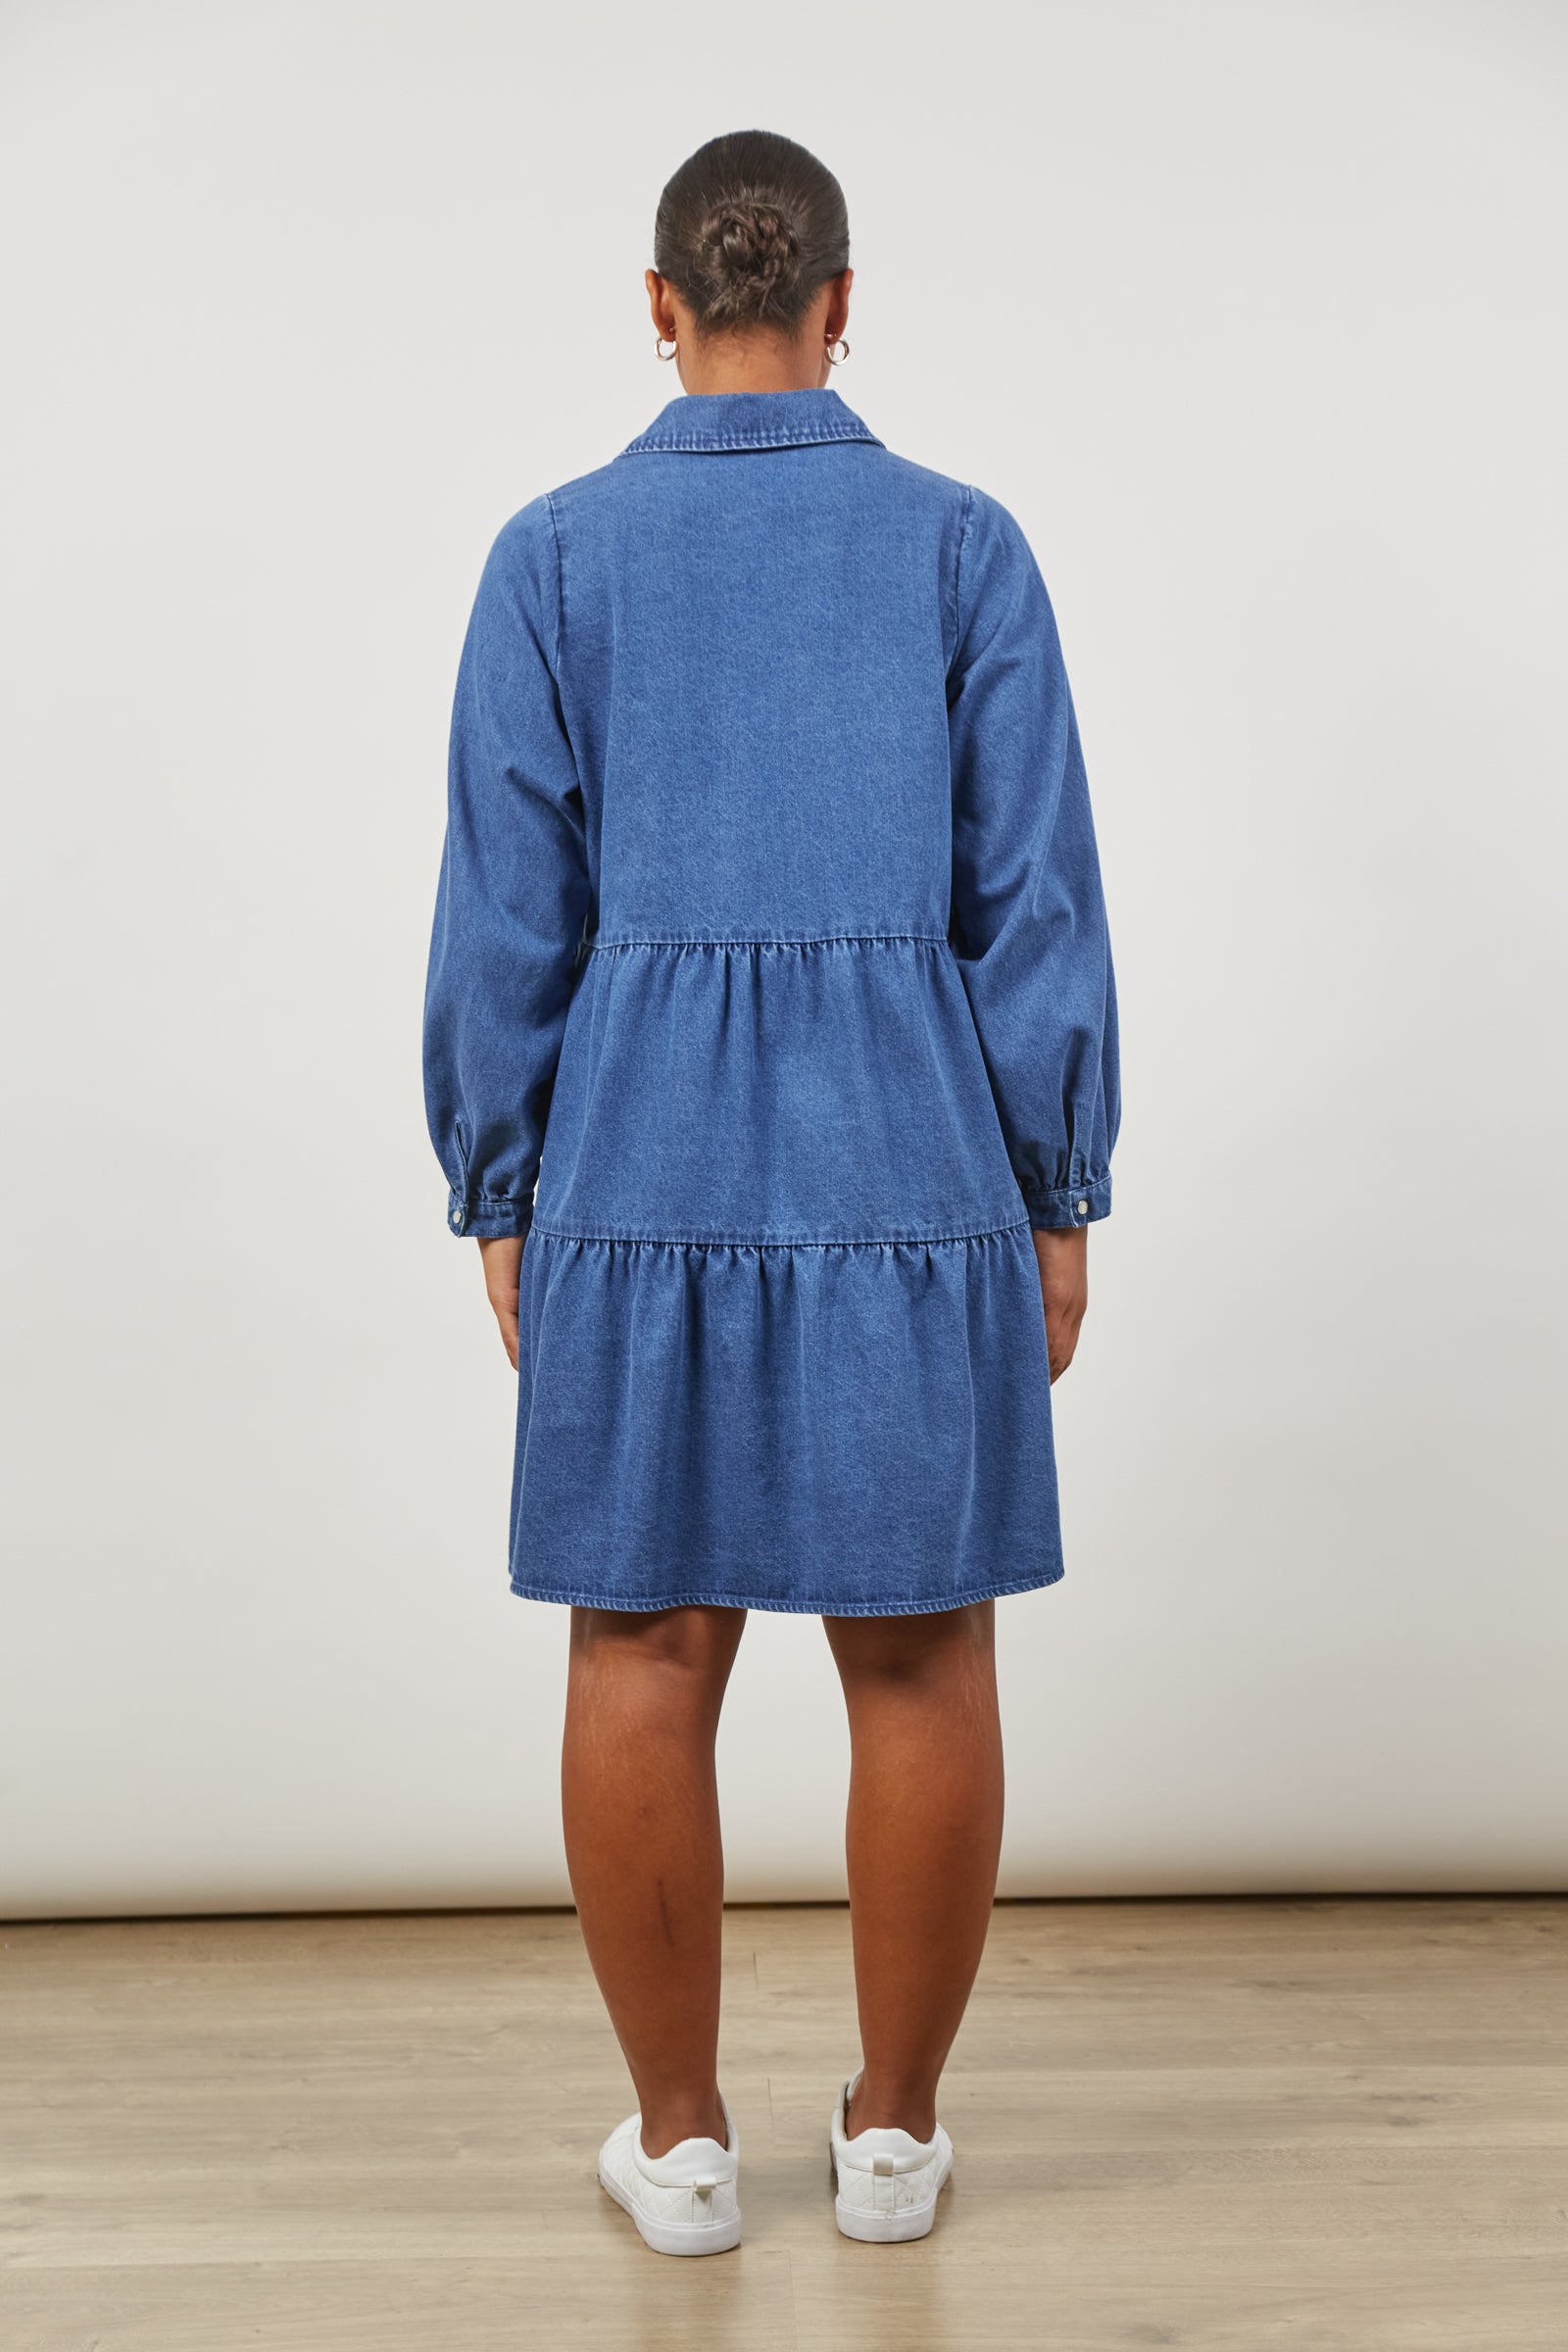 Urban Dress - Heritage Blue Denim